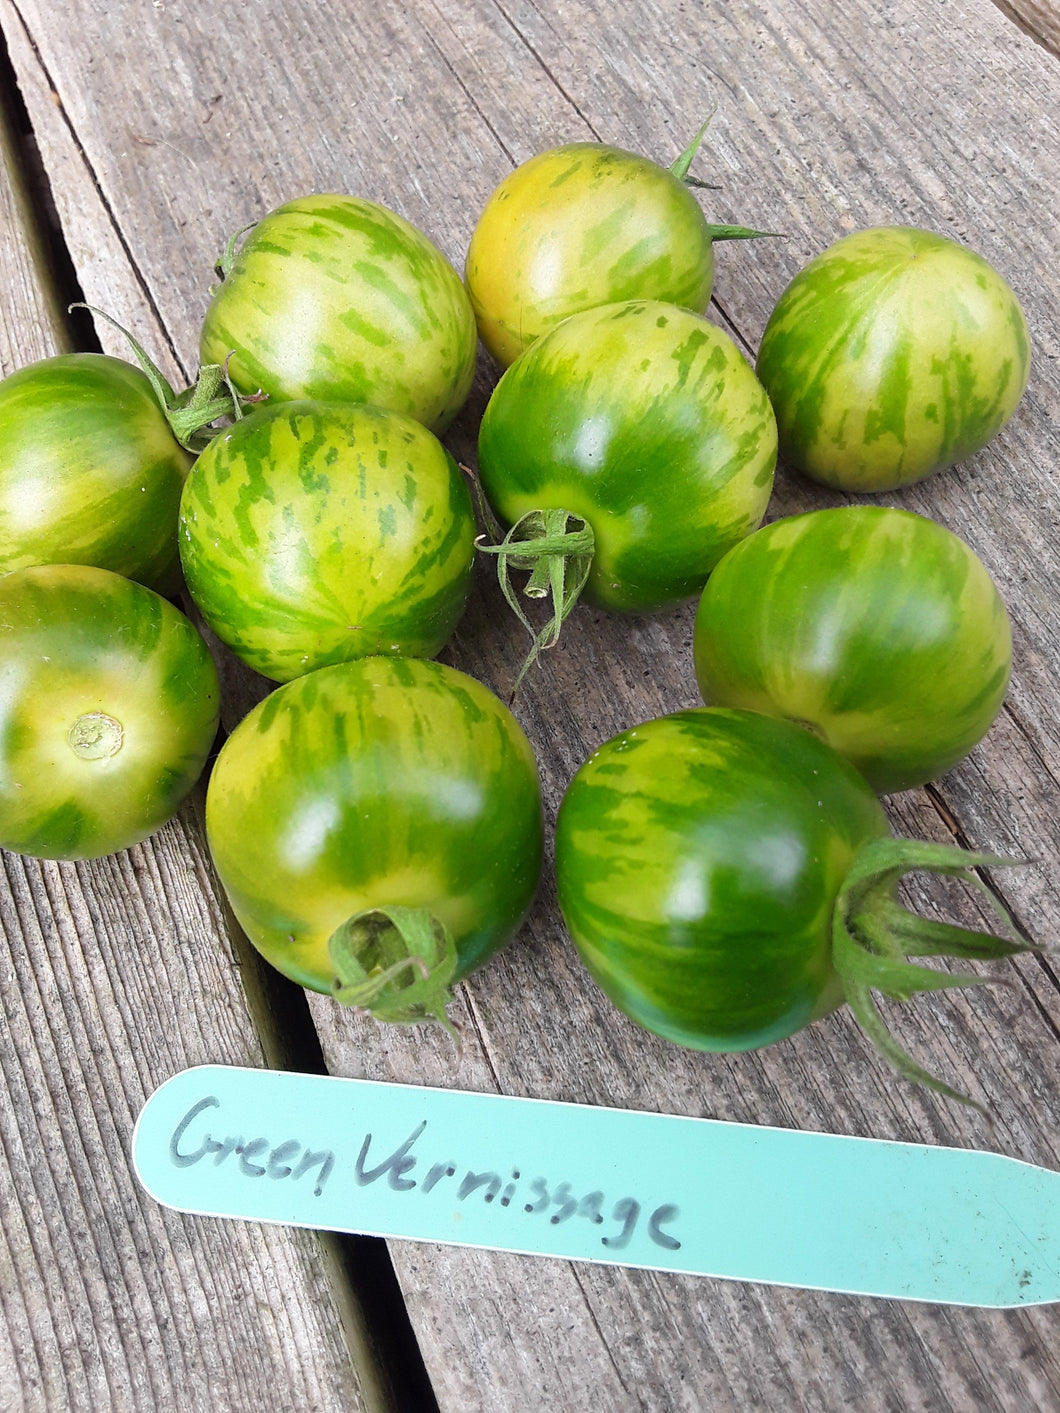 Tomato: Green Vernissage - seeds